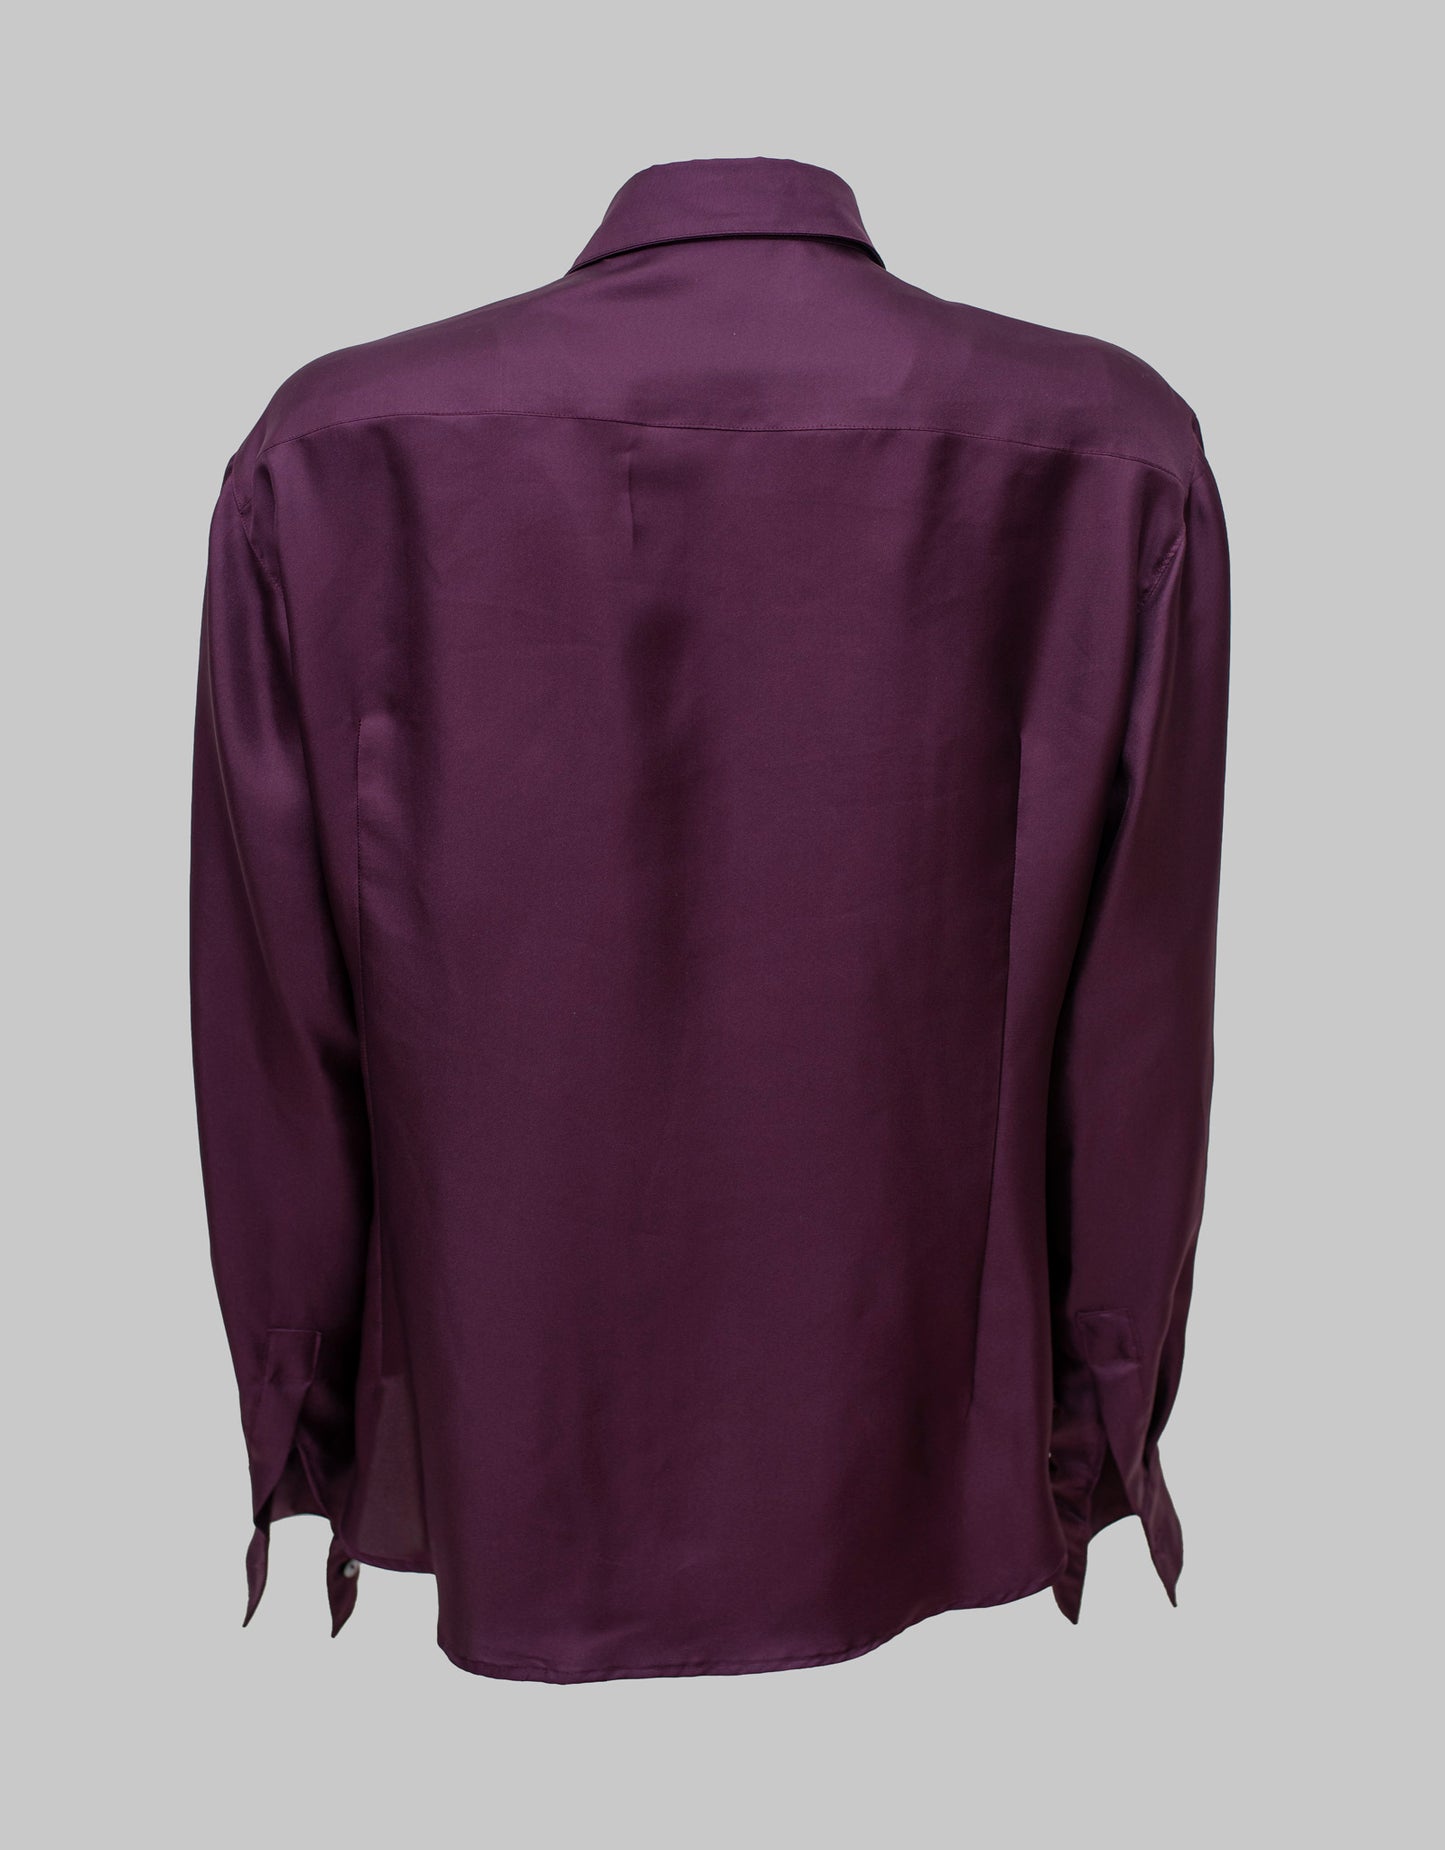 Roches burgundy shirt